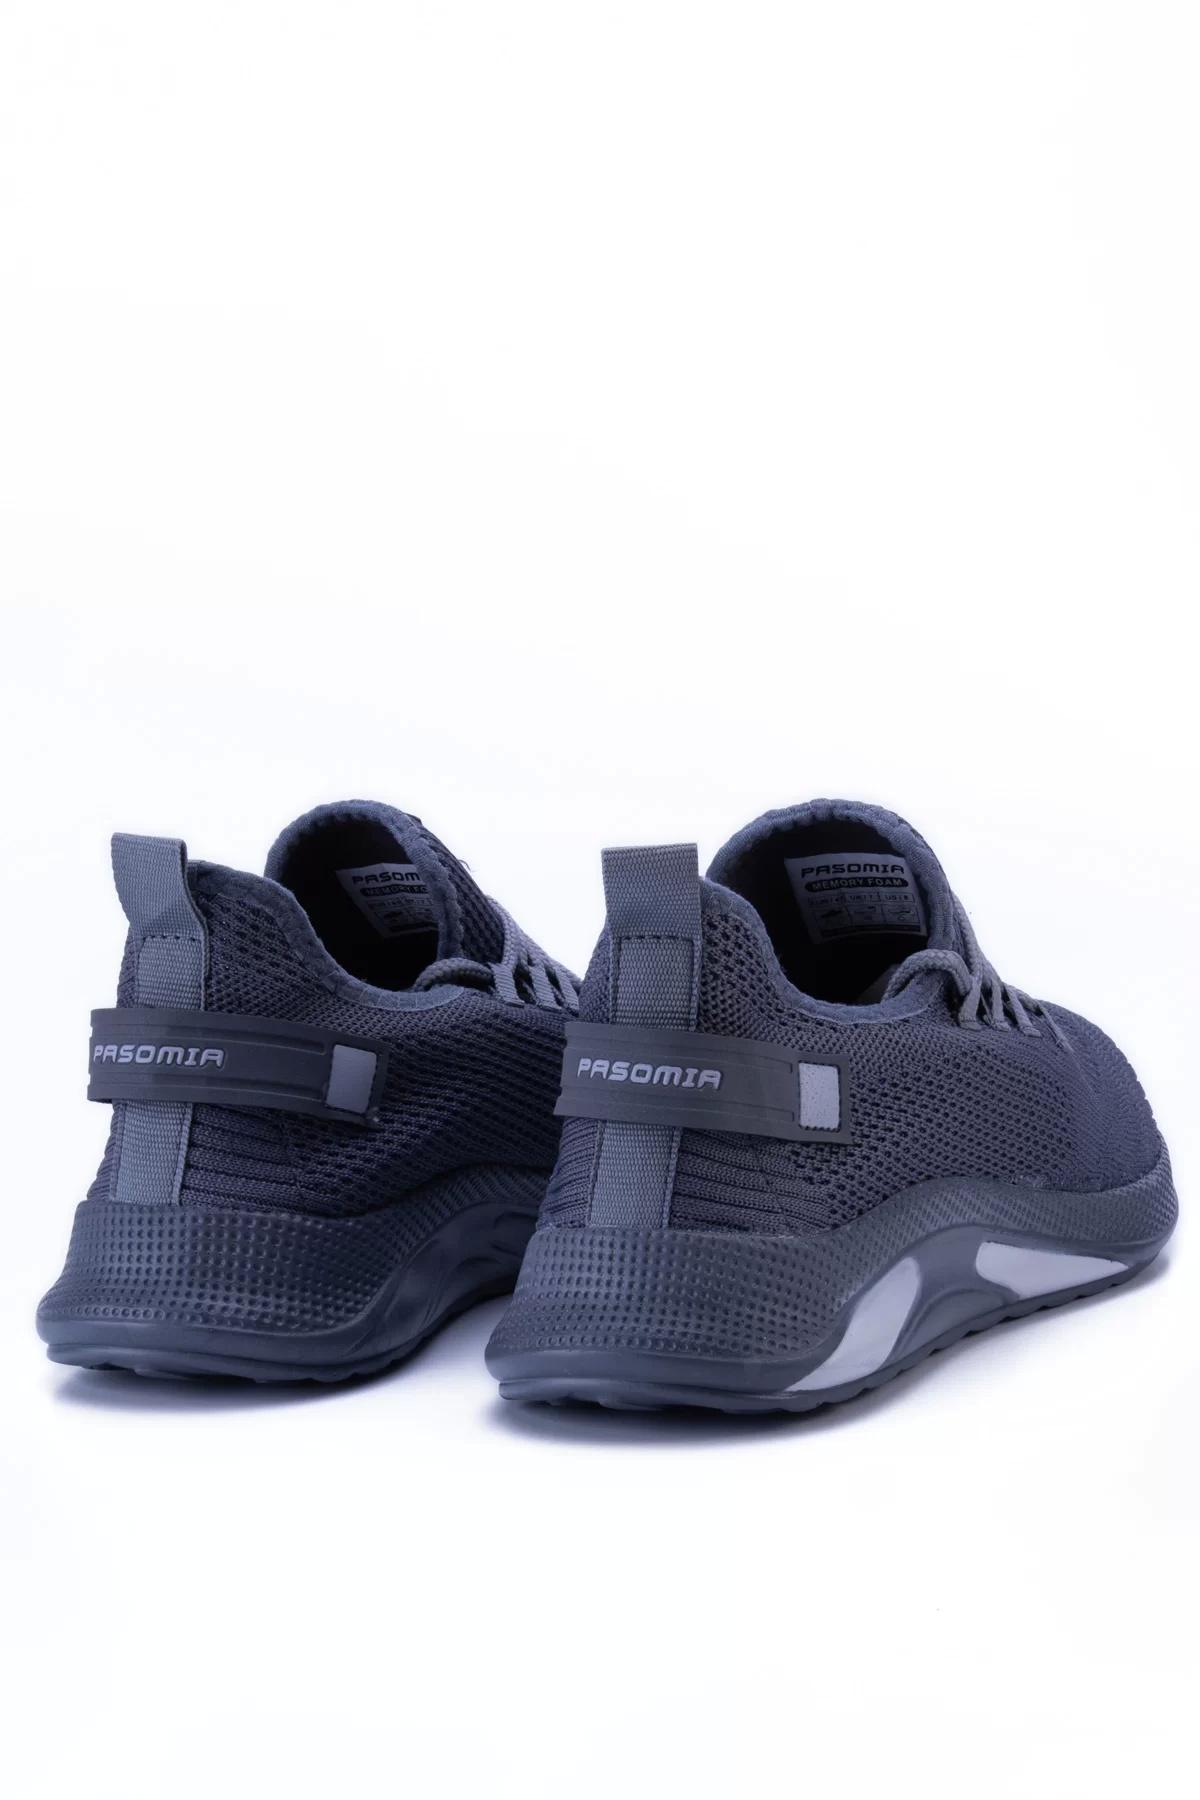 Unisex Triko Sneaker 4555 - Füme